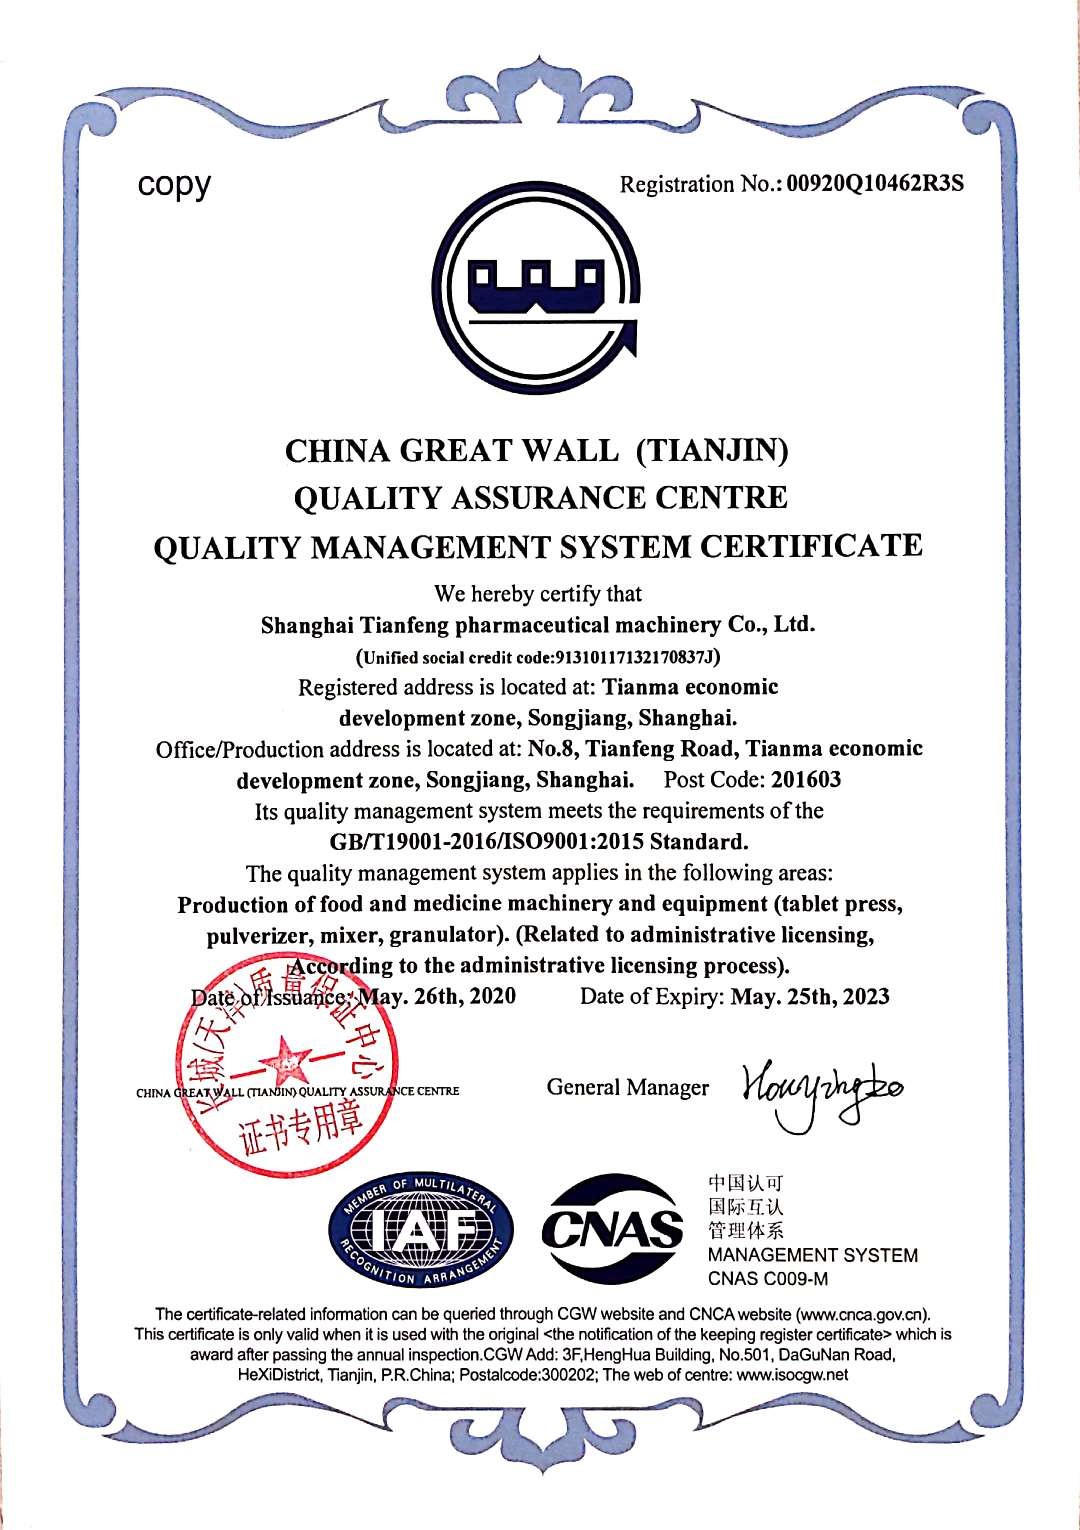 Shanghai Tianfeng Pharmaceutical Equipment Co., Ltd. Certifications